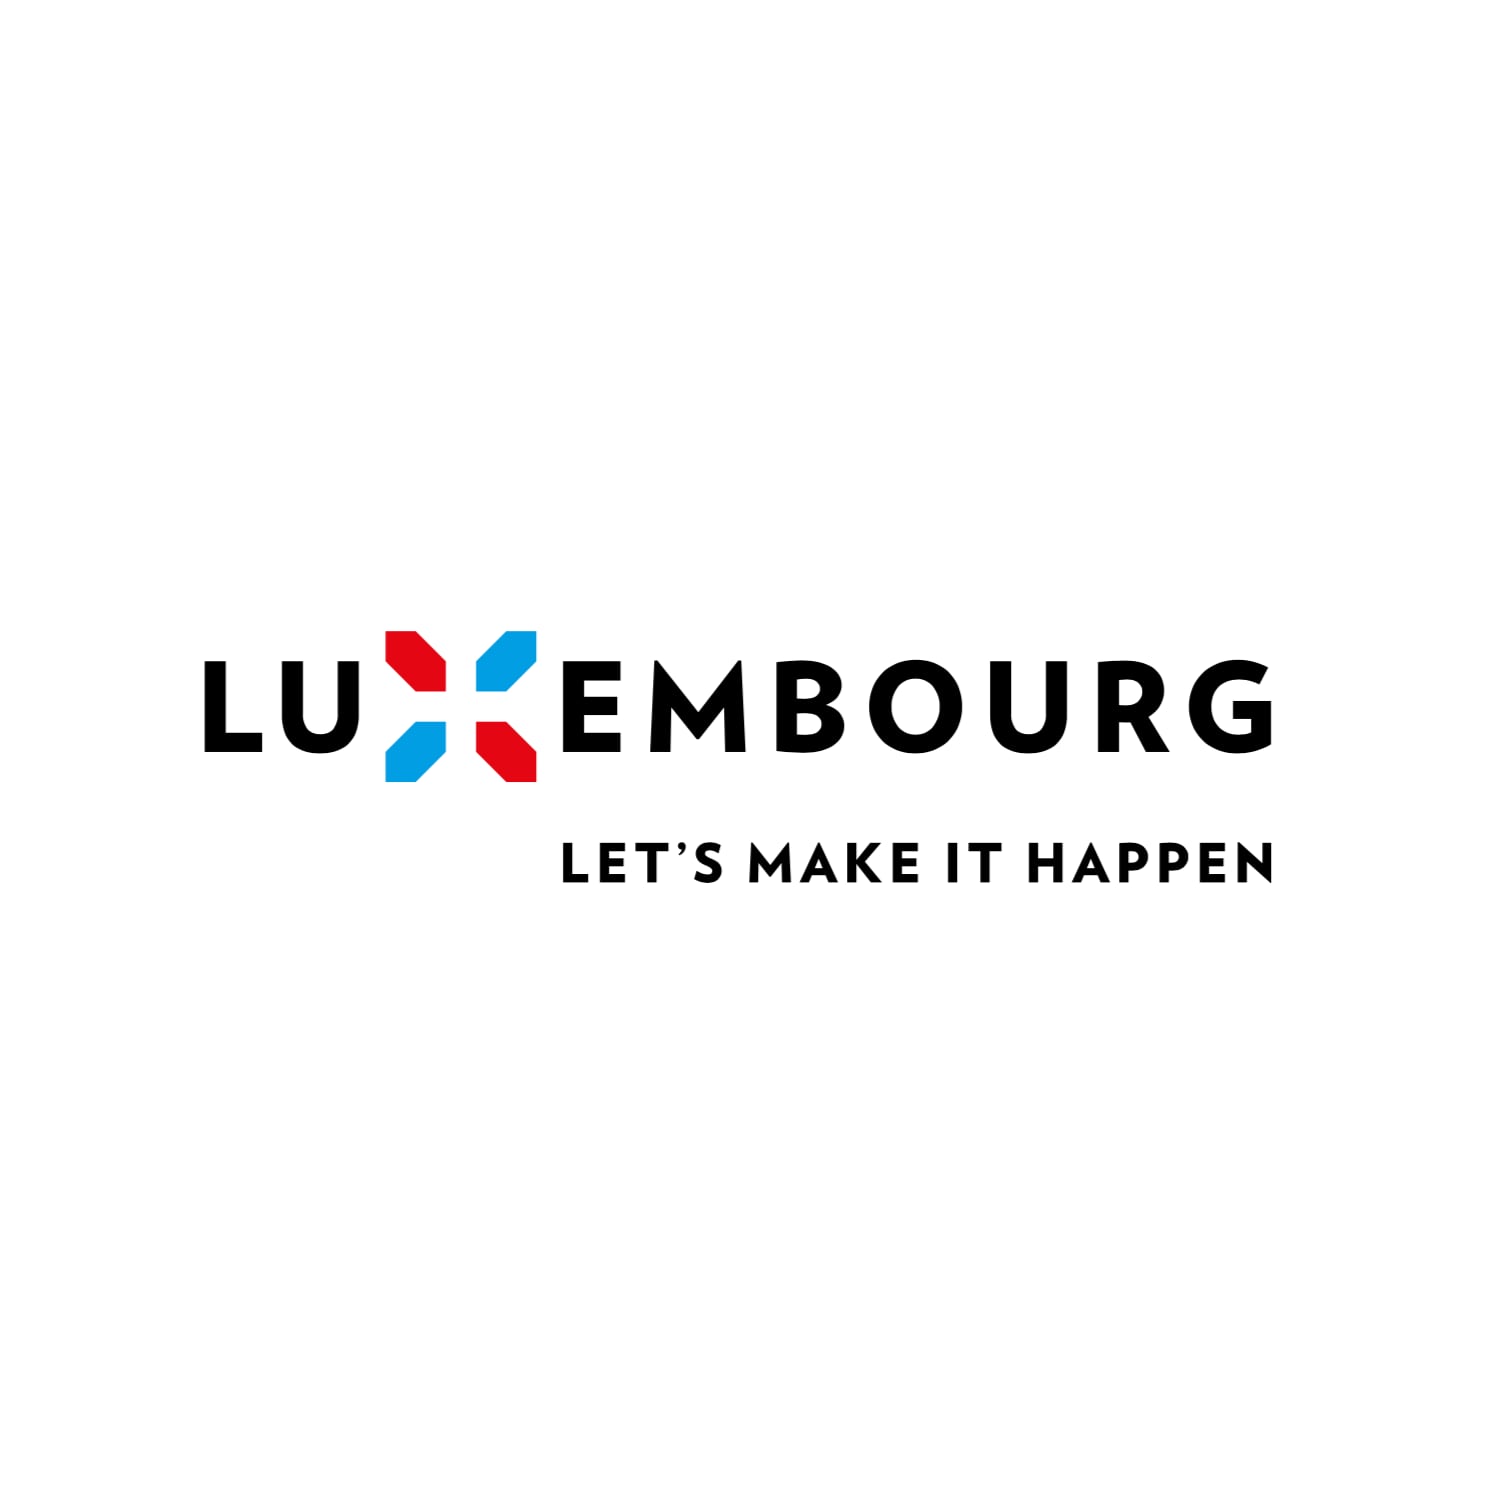 Luxembourg Let's make it happen